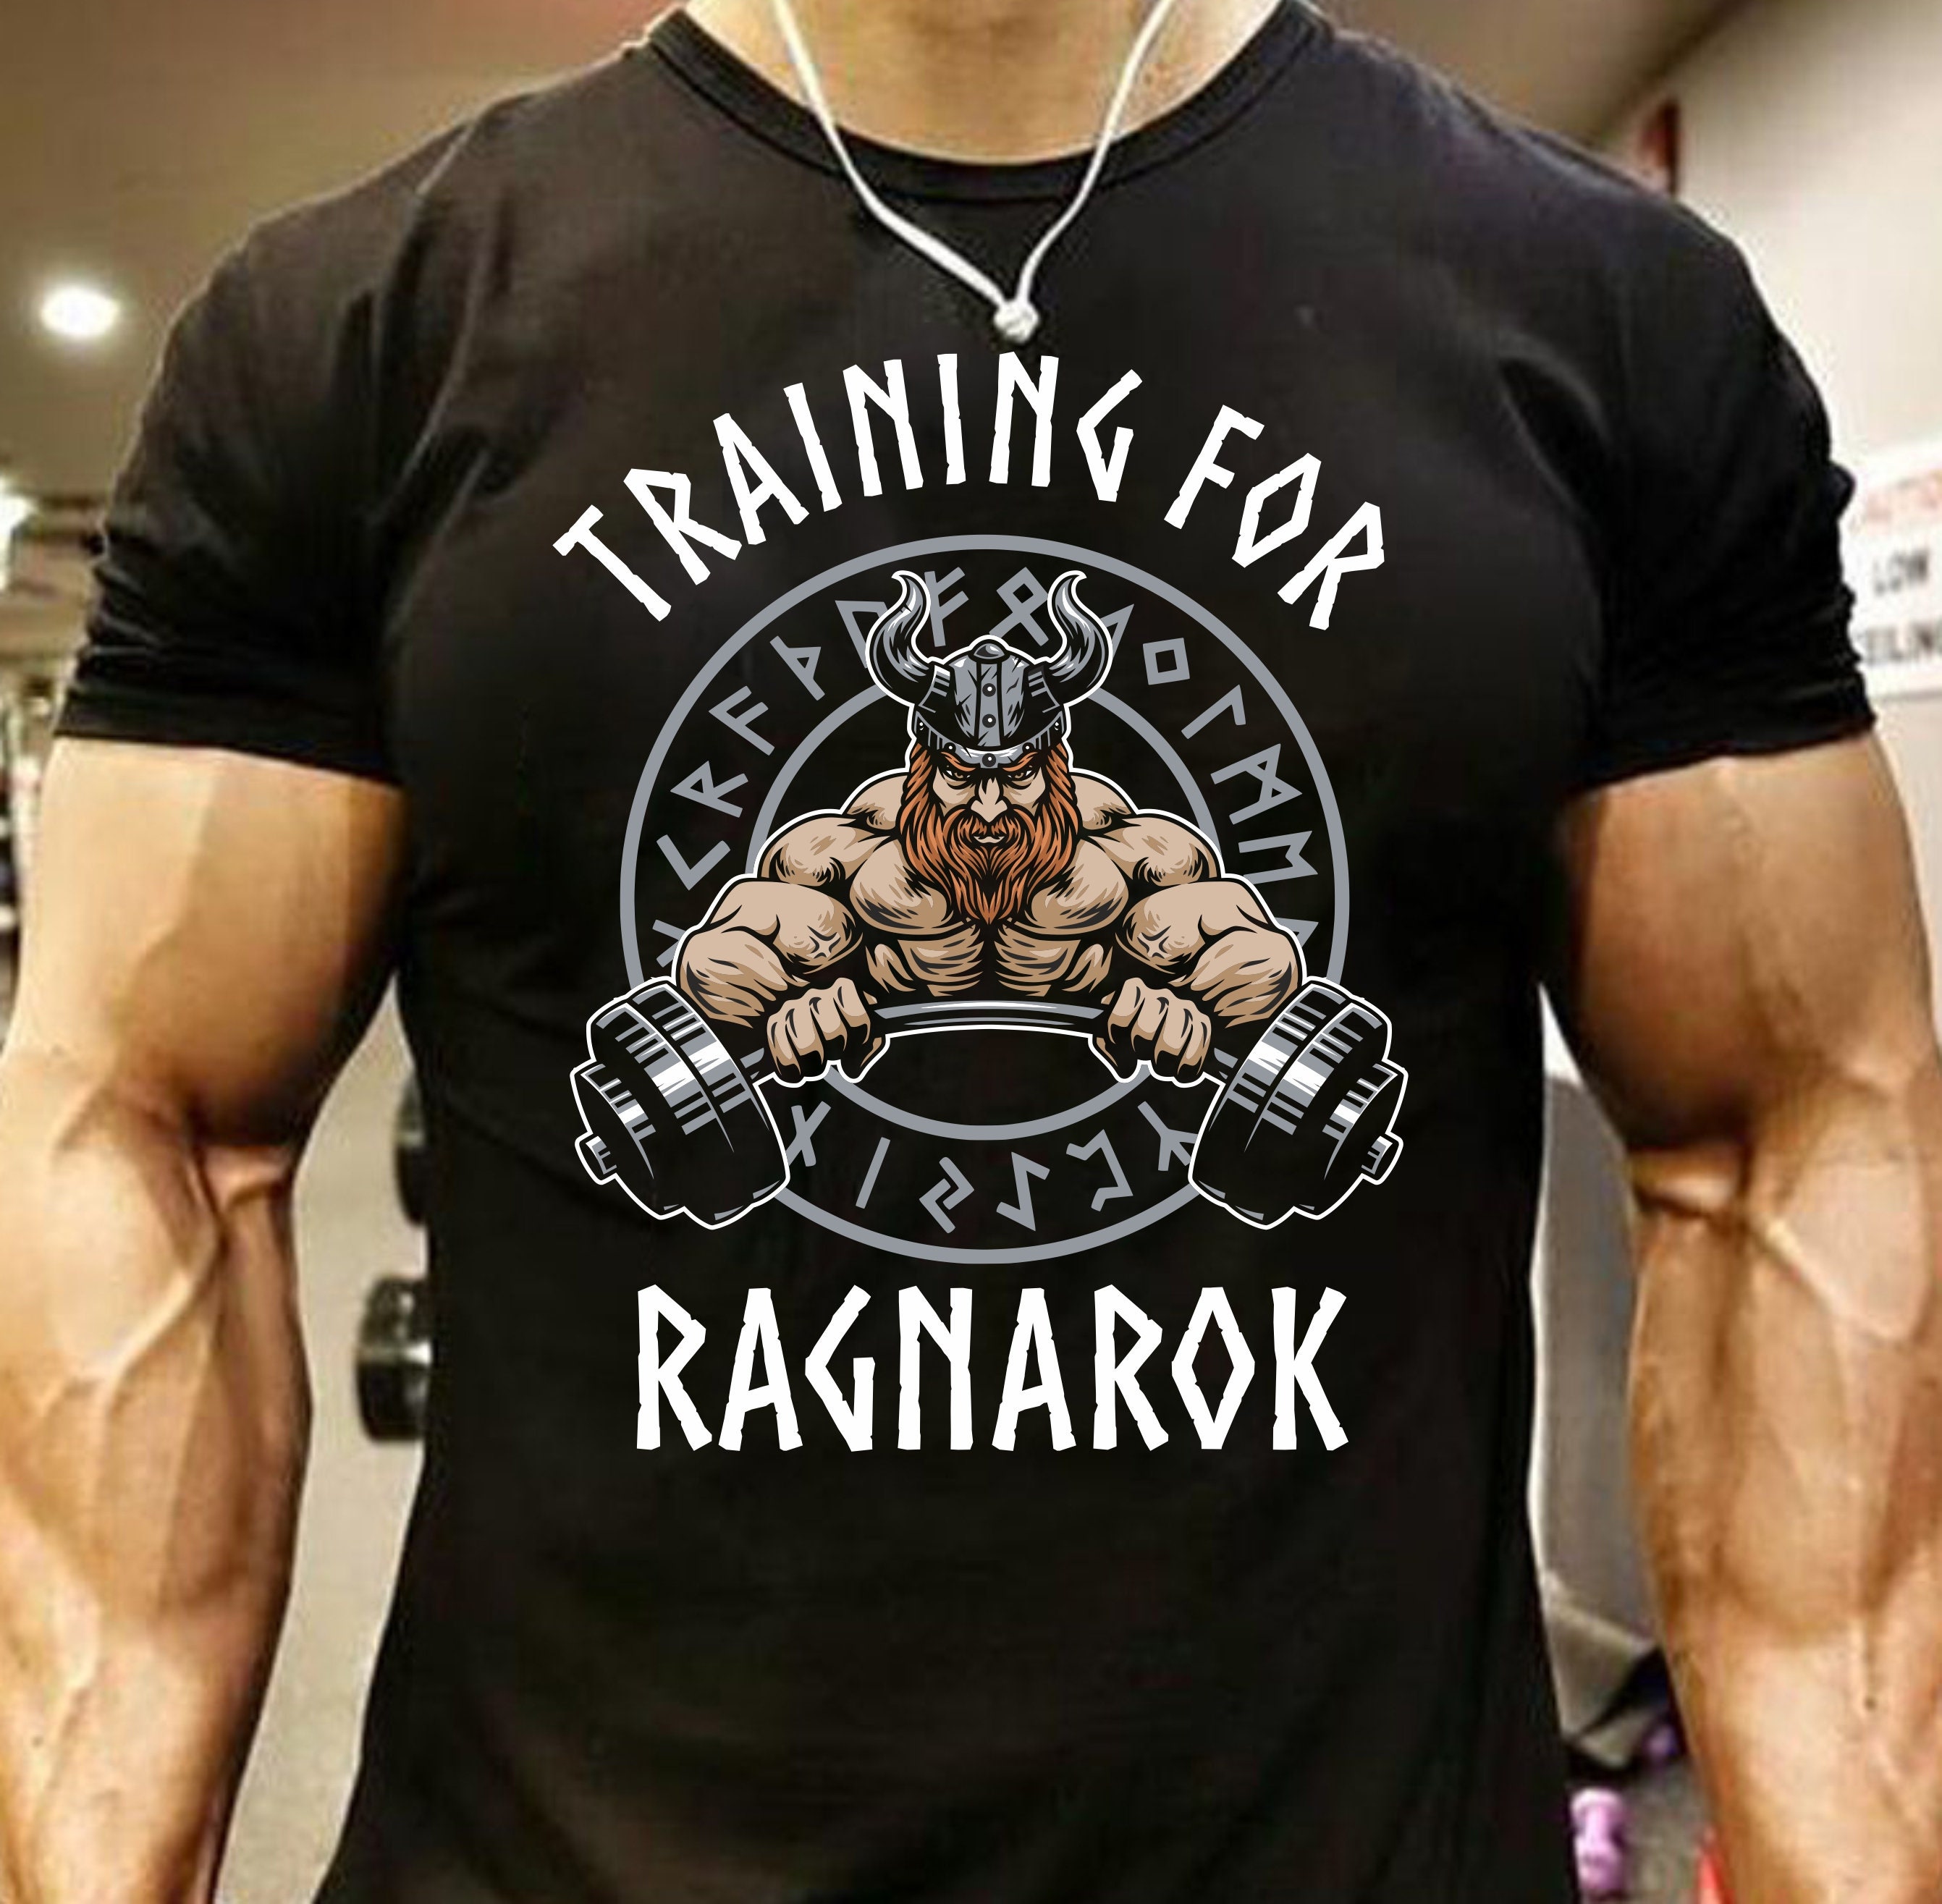 AE, Bodybuilding Tee - Black, Gym T-Shirts Men